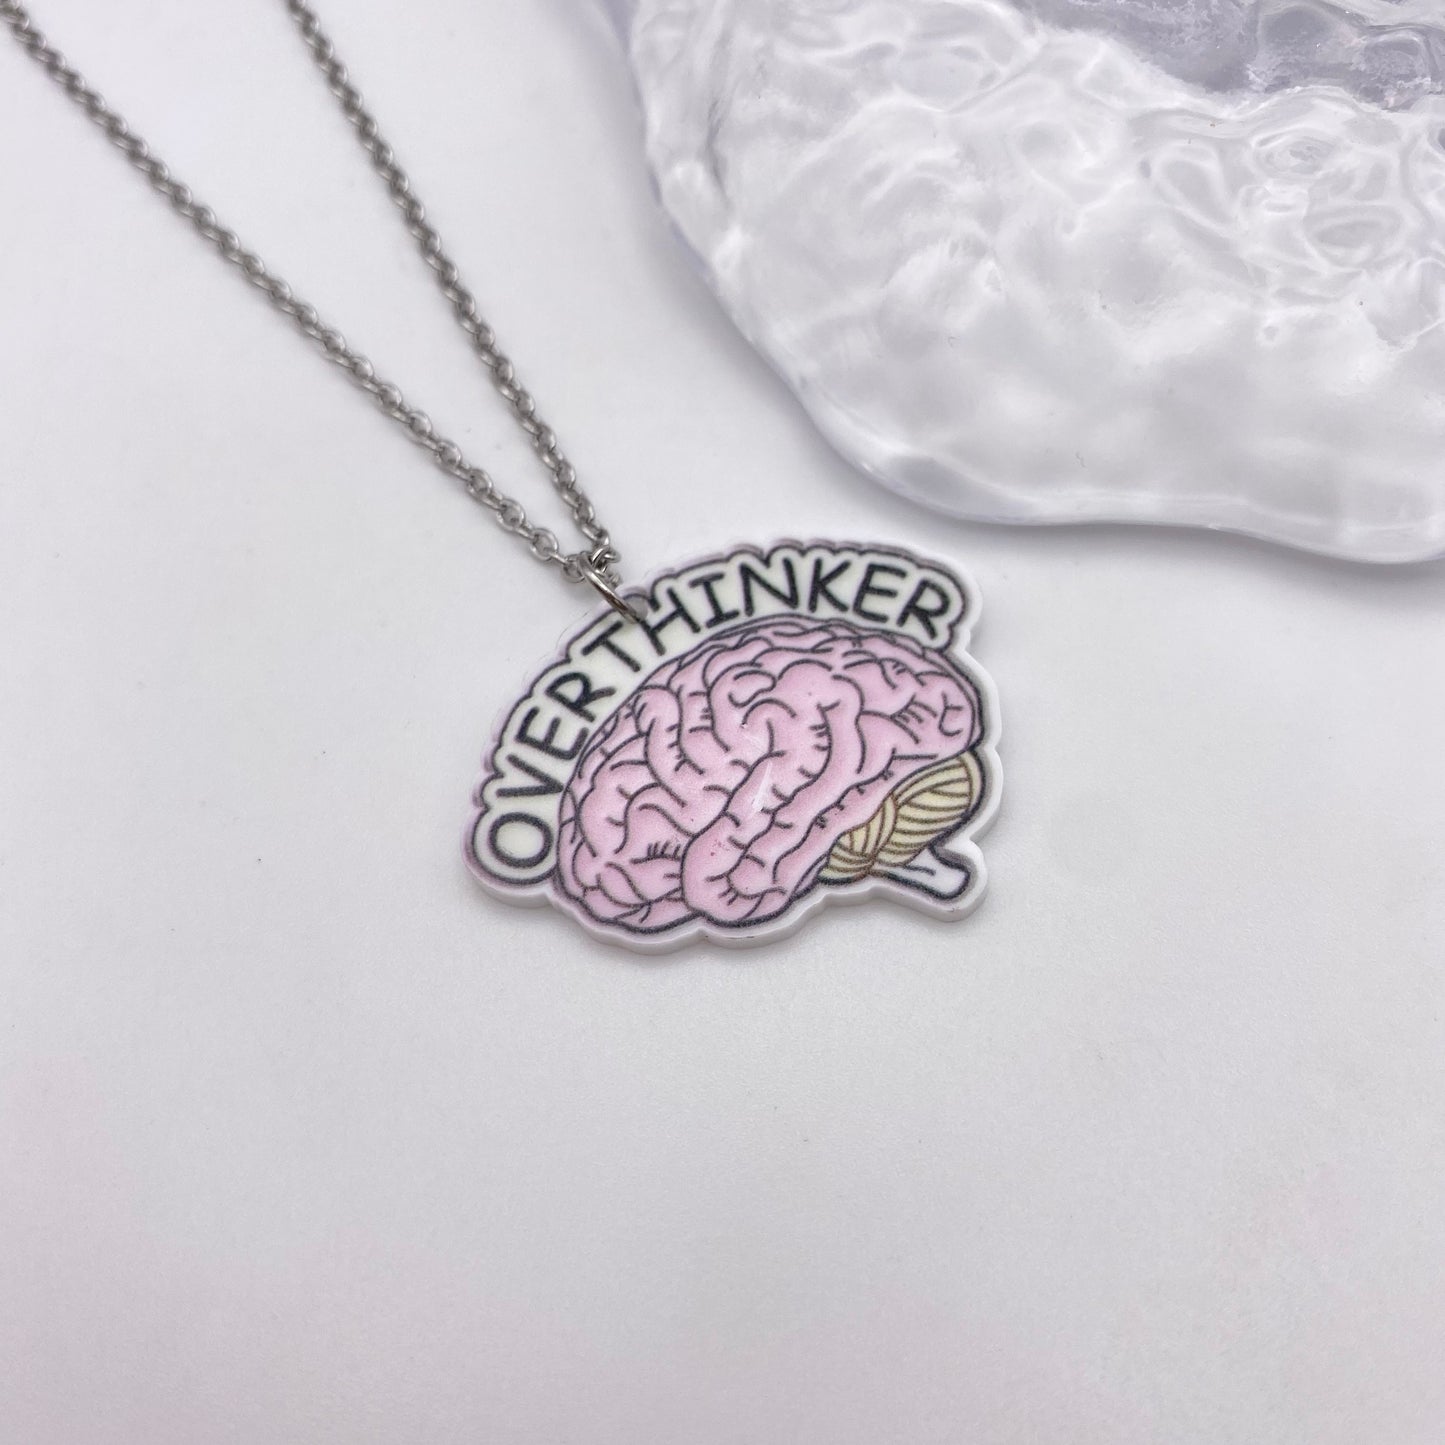 ‘Overthinker’ Brain Mind Necklace